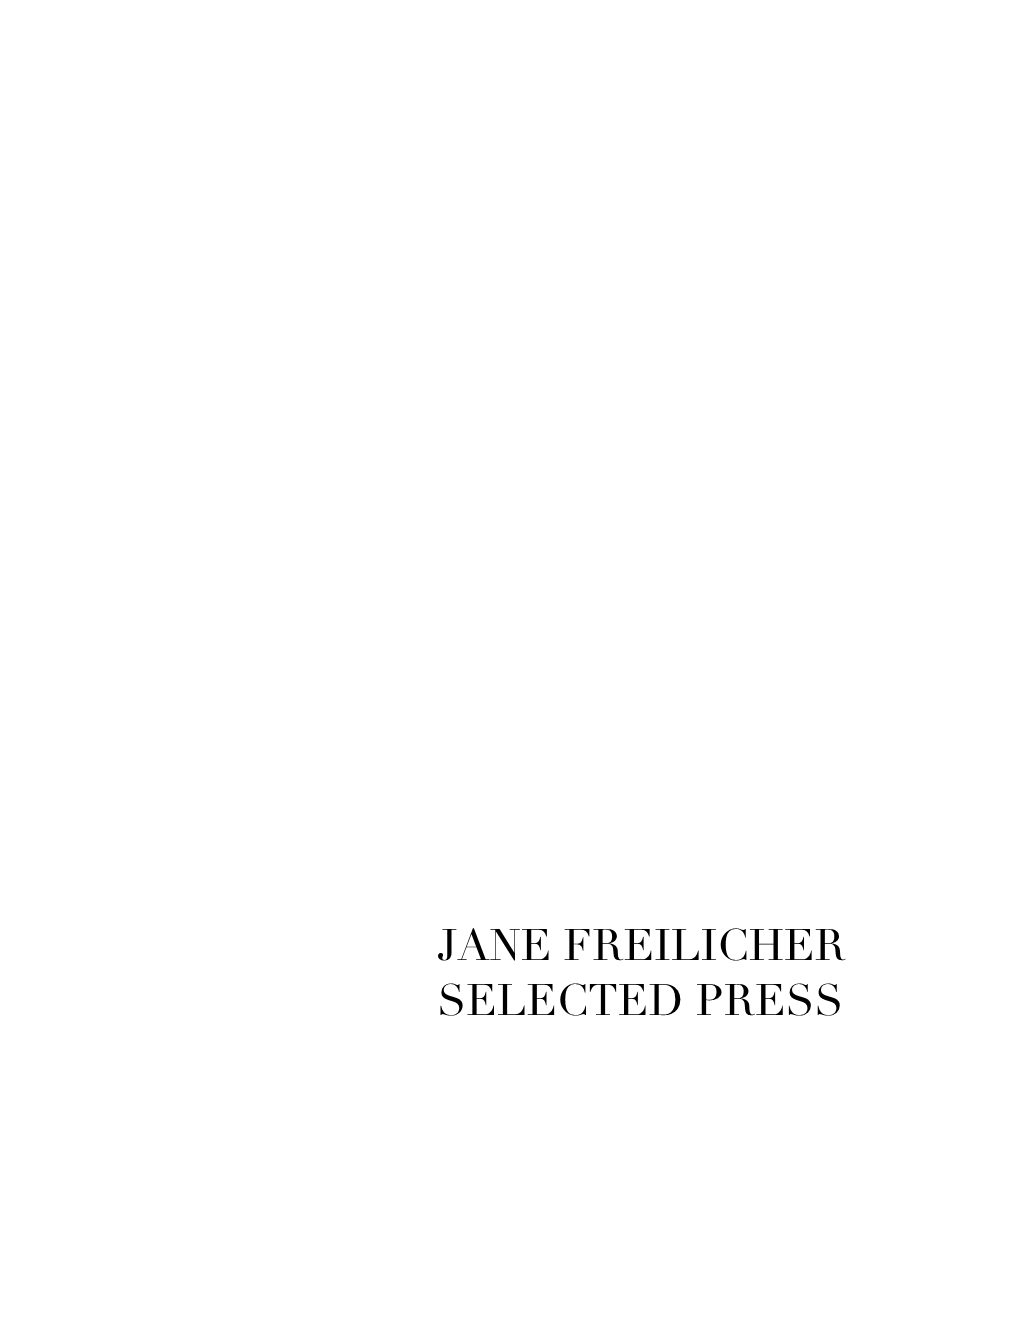 Jane Freilicher Selected Press